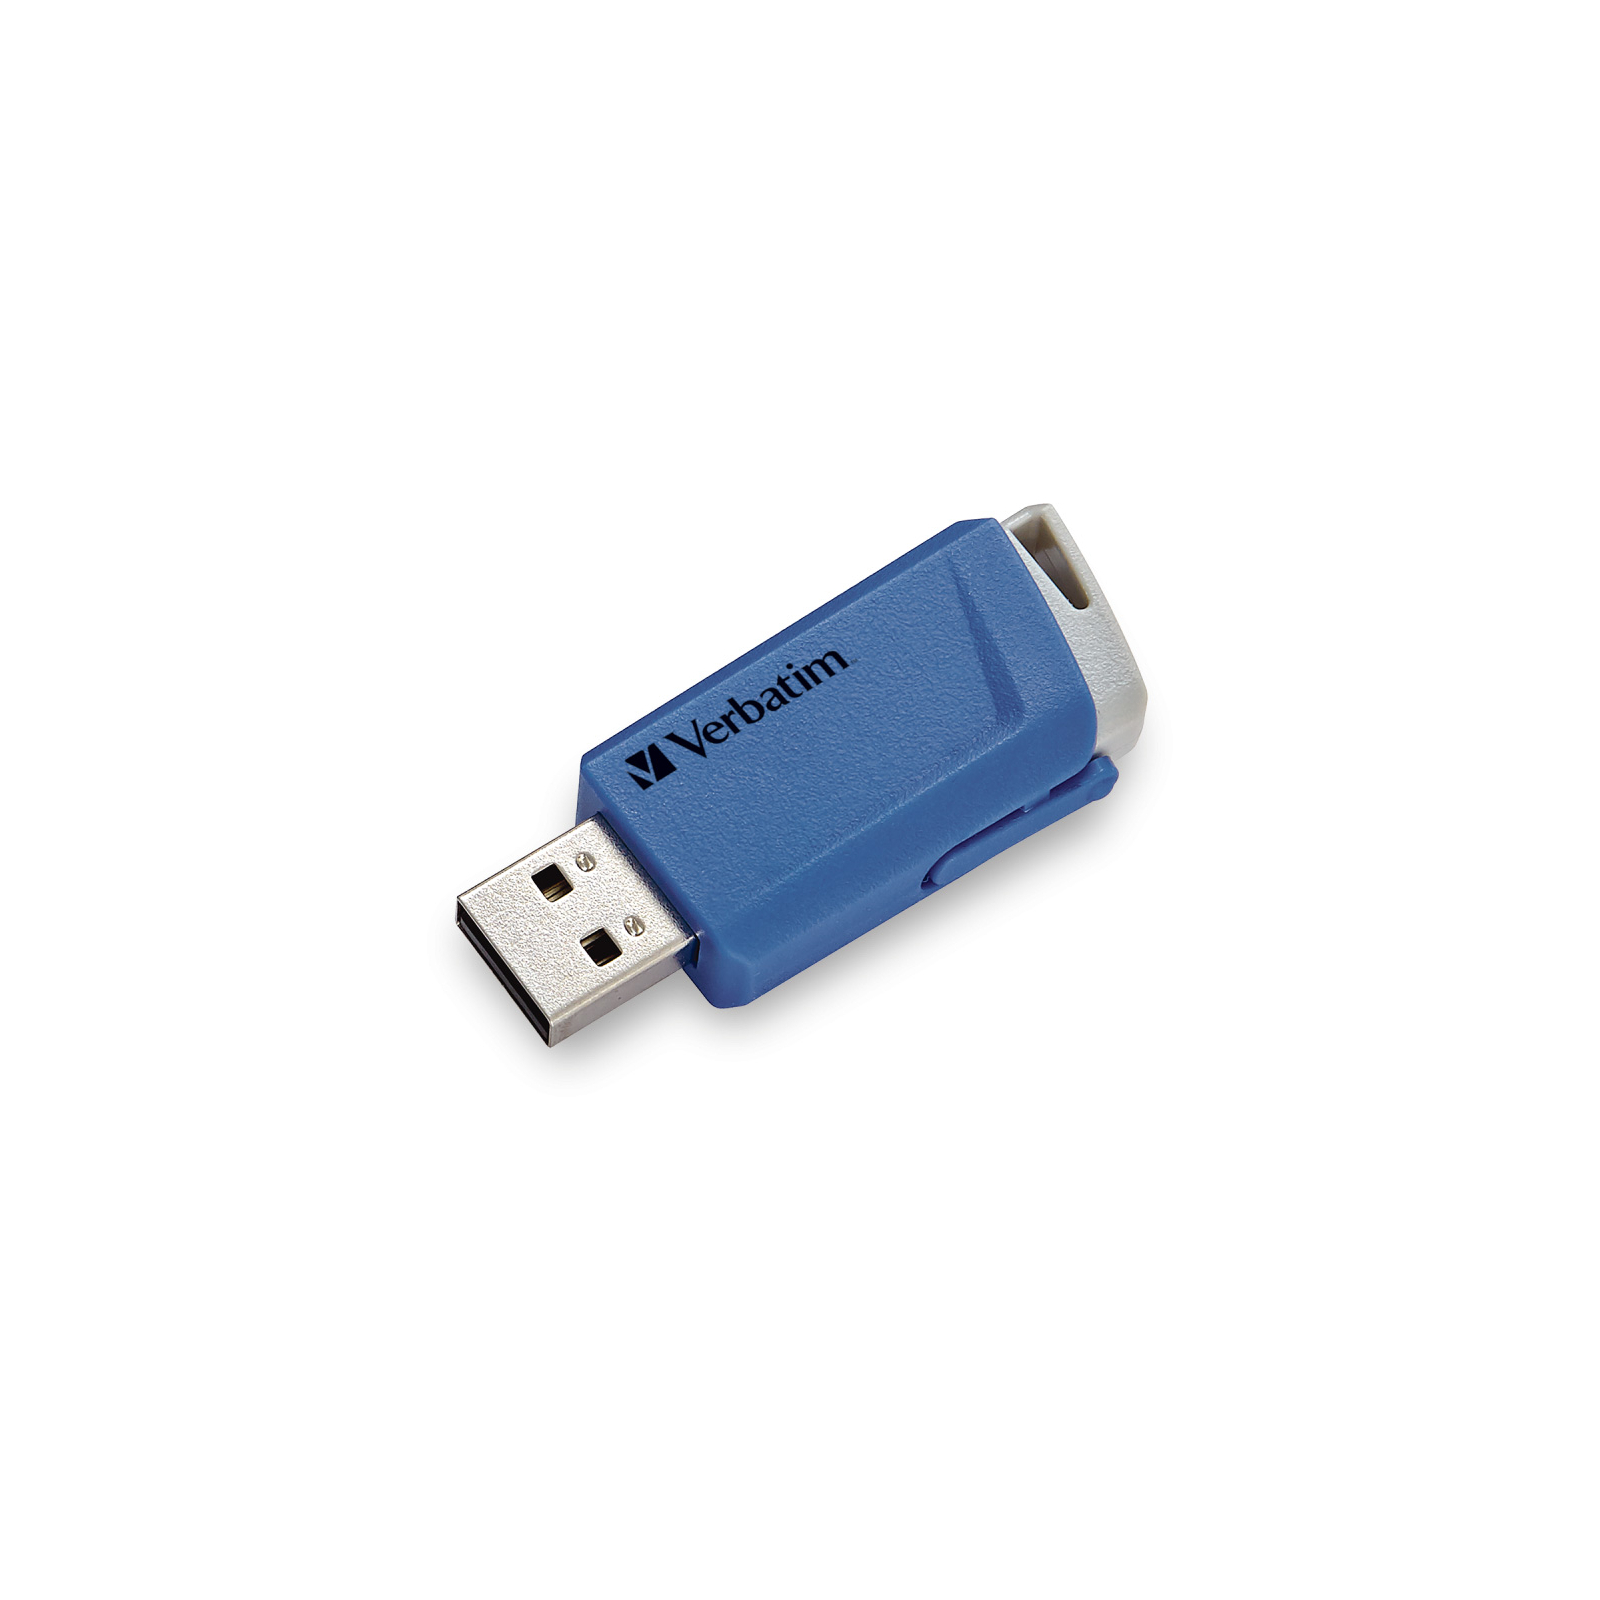 USB флеш накопичувач Verbatim 32GB Store 'n' Click USB 3.2 (49307) зображення 5